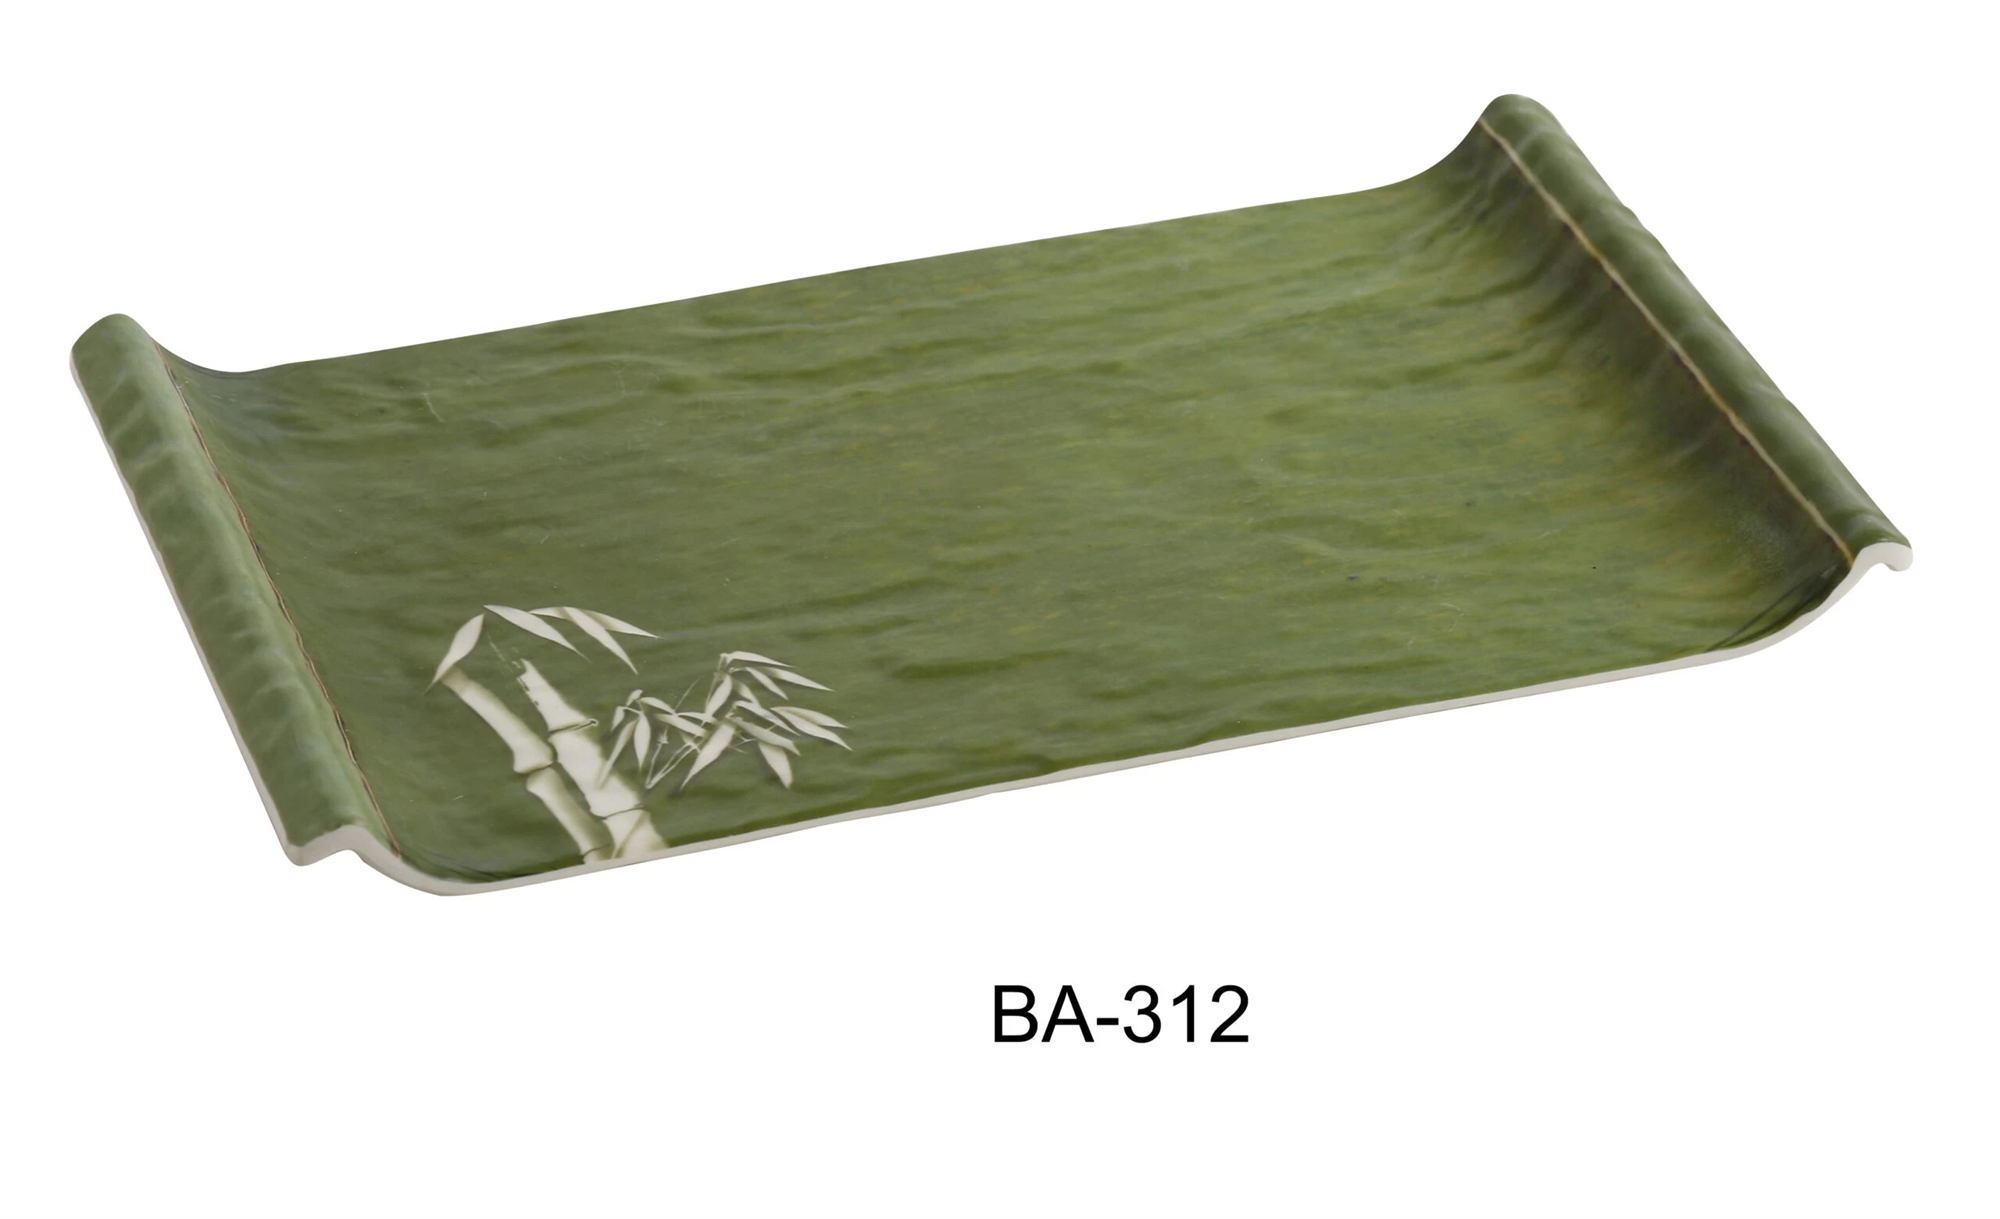 Yanco BA-312 Bamboo Style 12â€³ X 6.75â€³ Display Plate